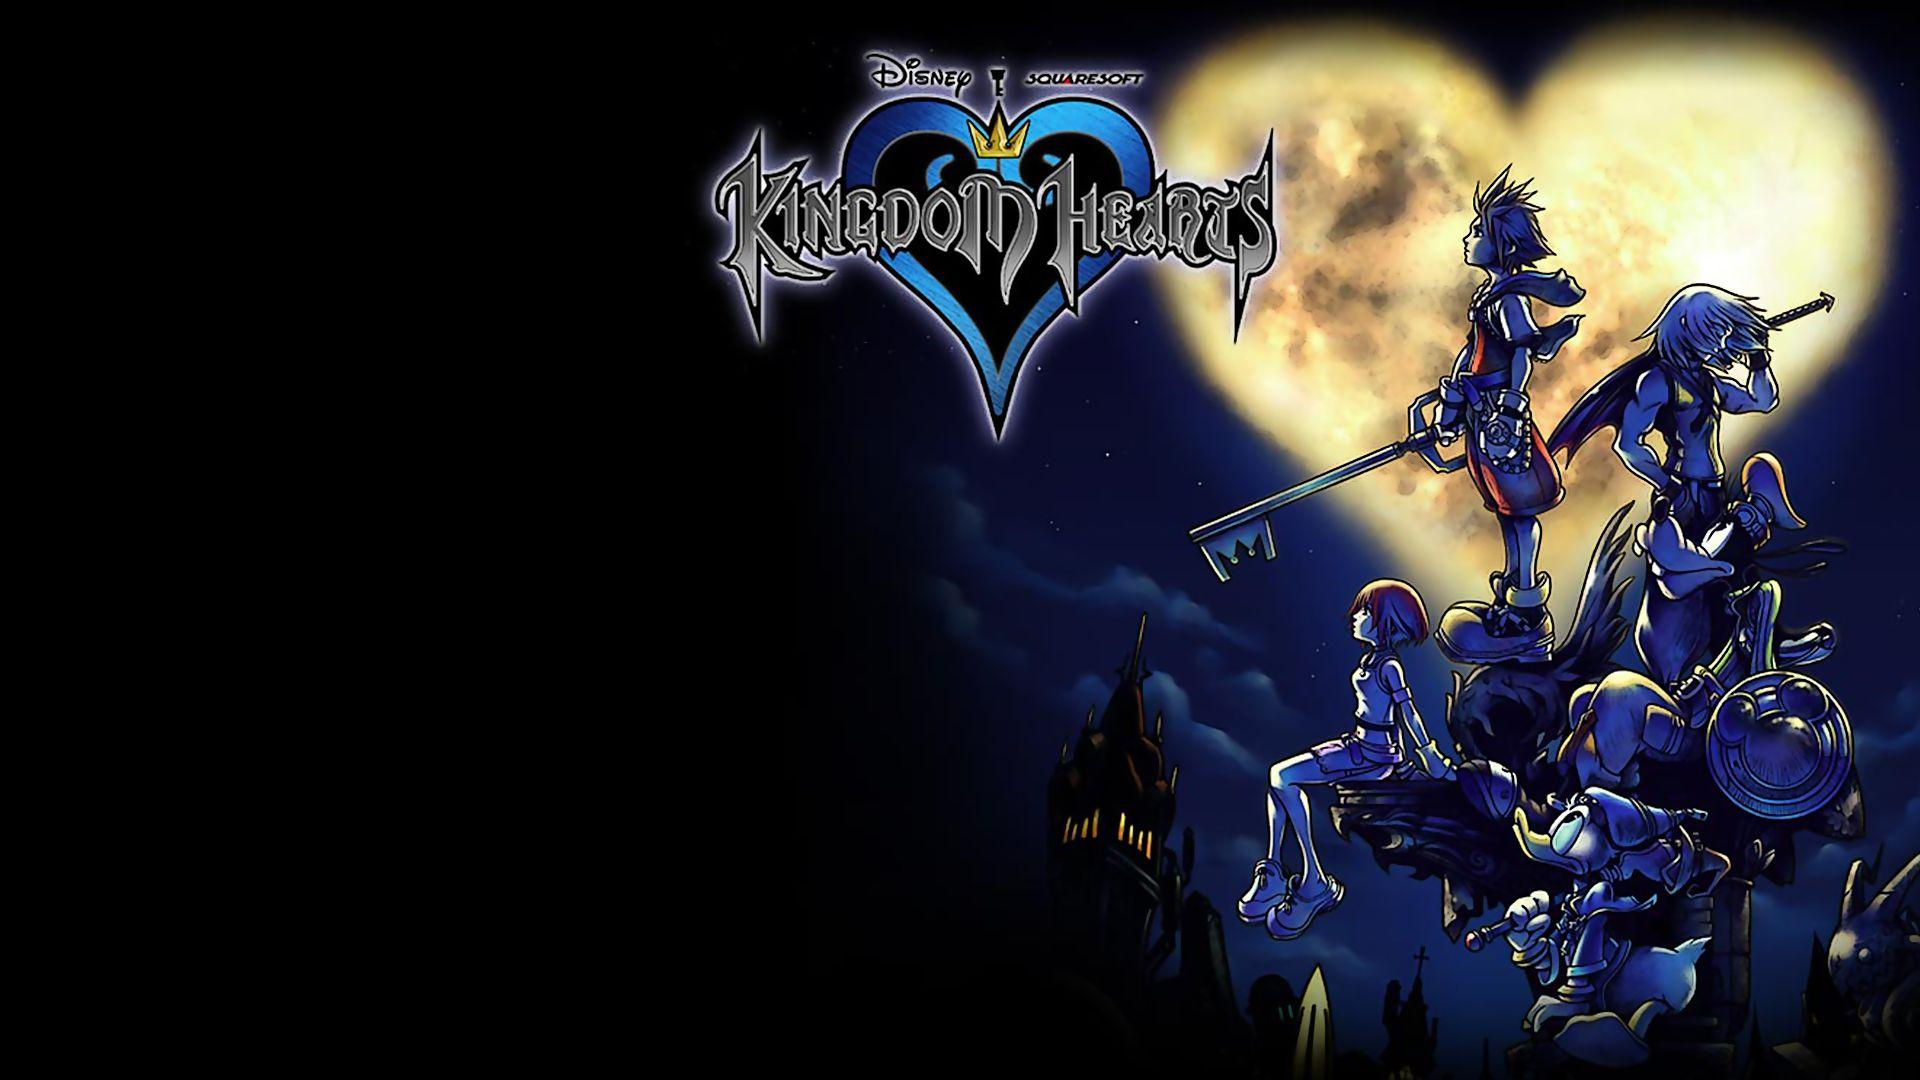 Kingdom Hearts Wallpapers - Top Free Kingdom Hearts Backgrounds